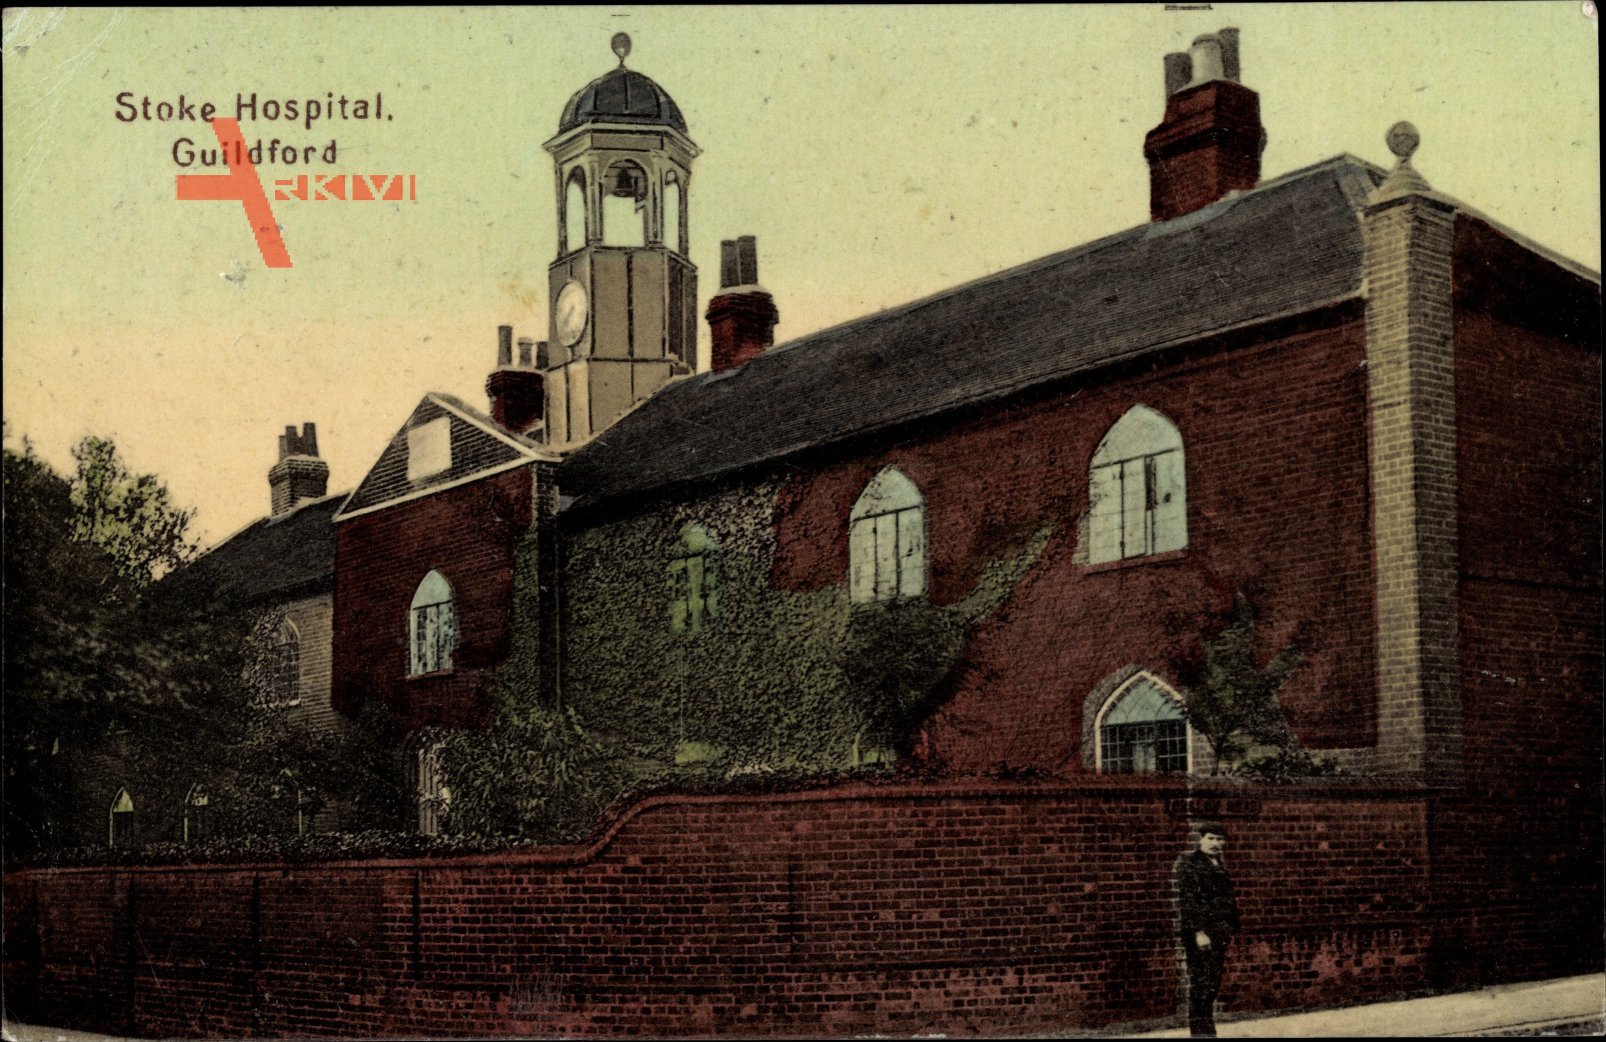 Guildford South East England, Stoke Hospital